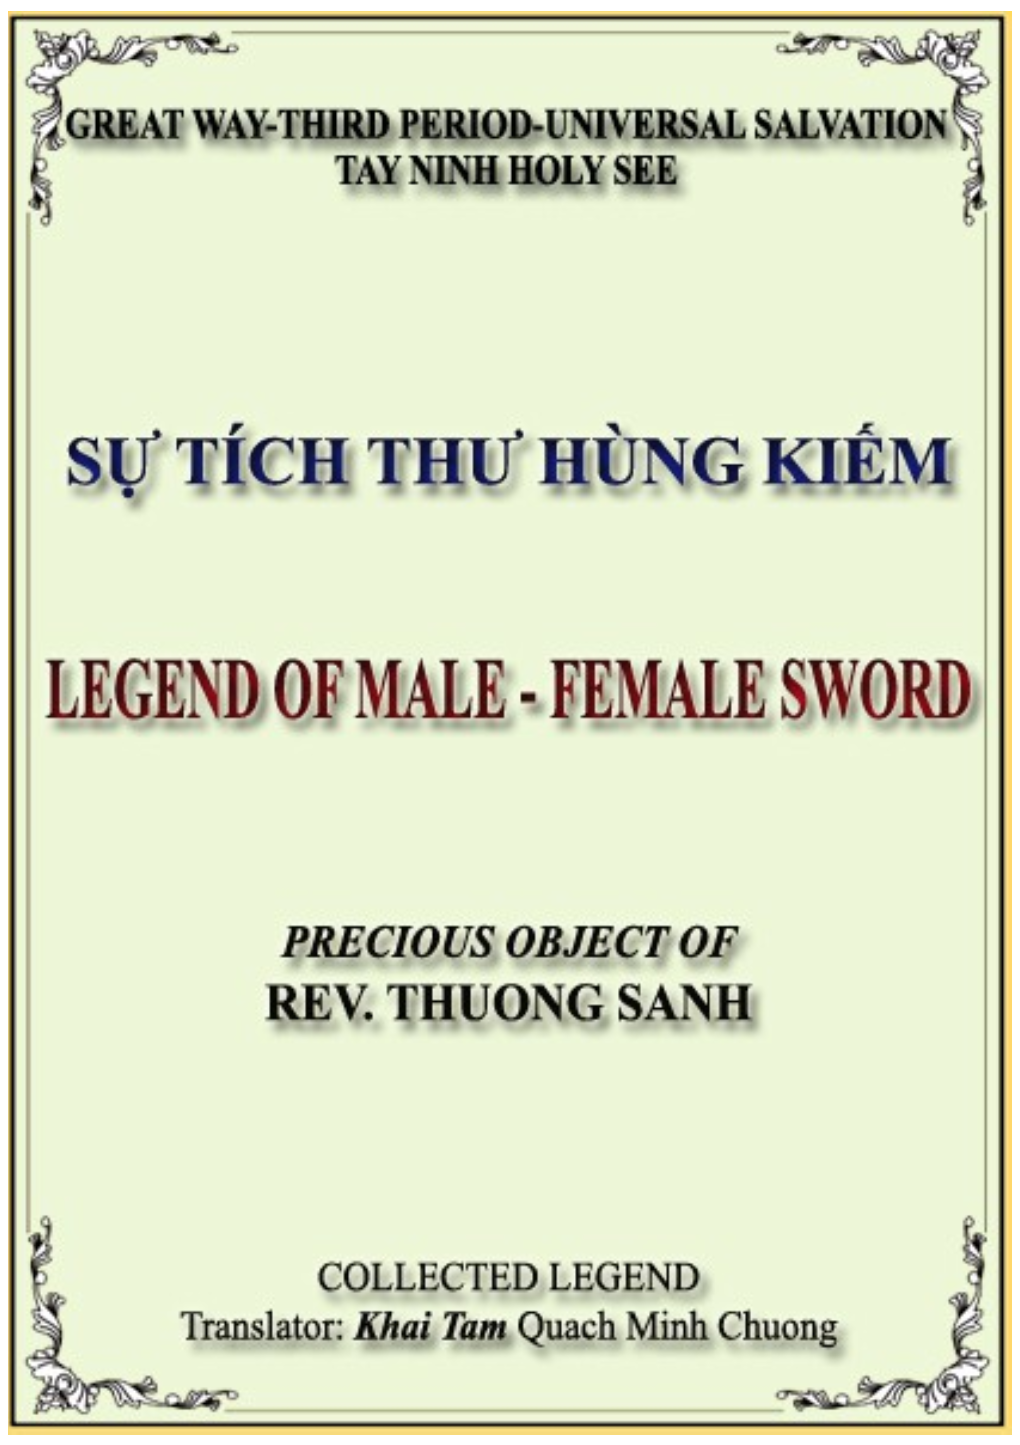 The Precious Object of Rev. Thuong Sanh